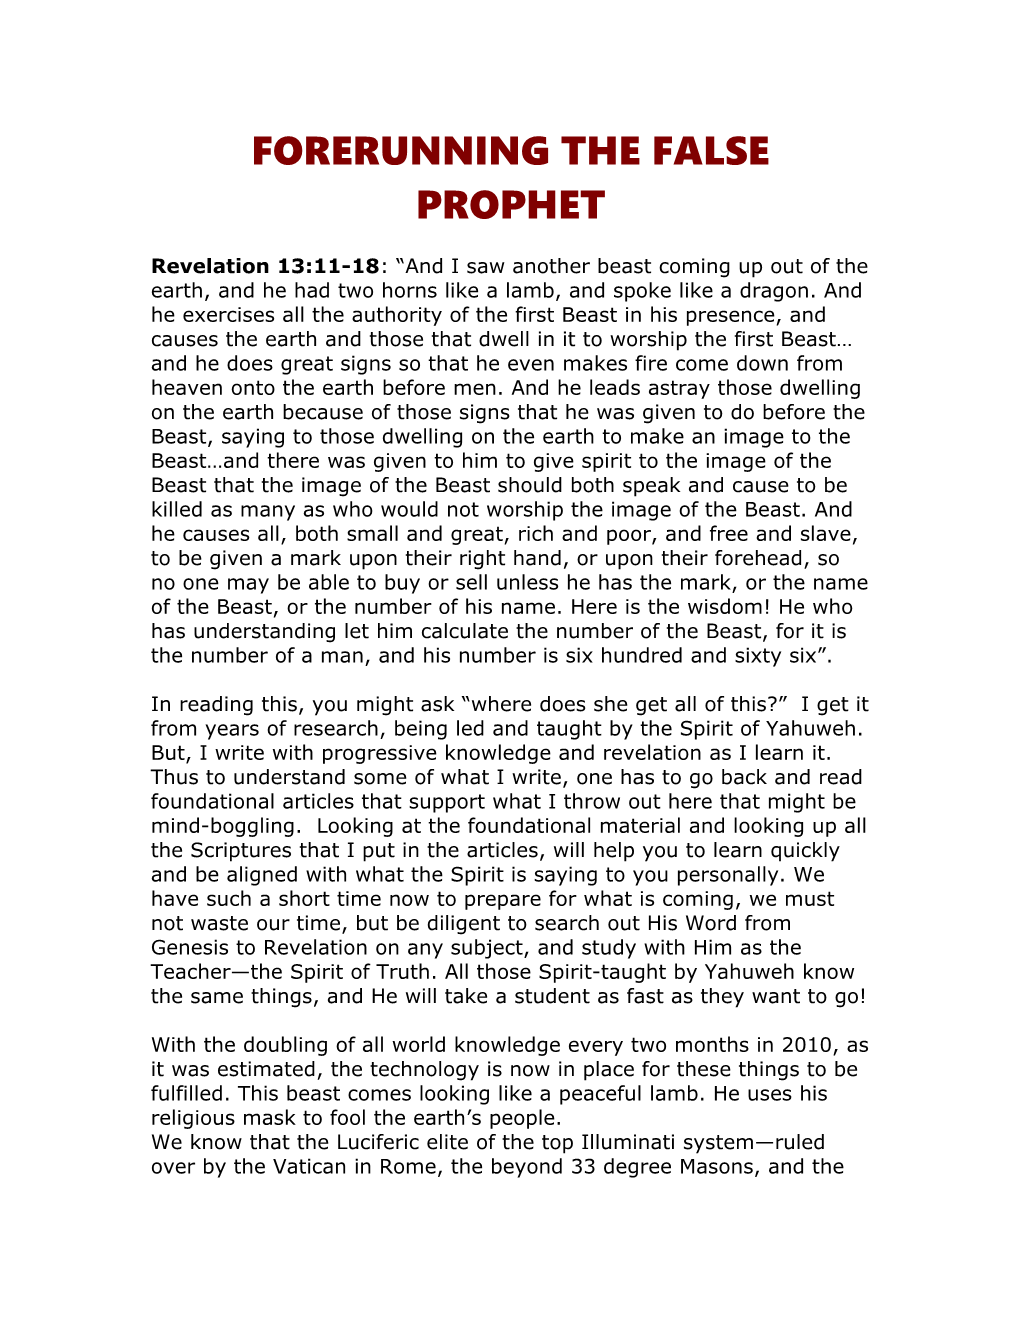 Forerunners of the False Prophet